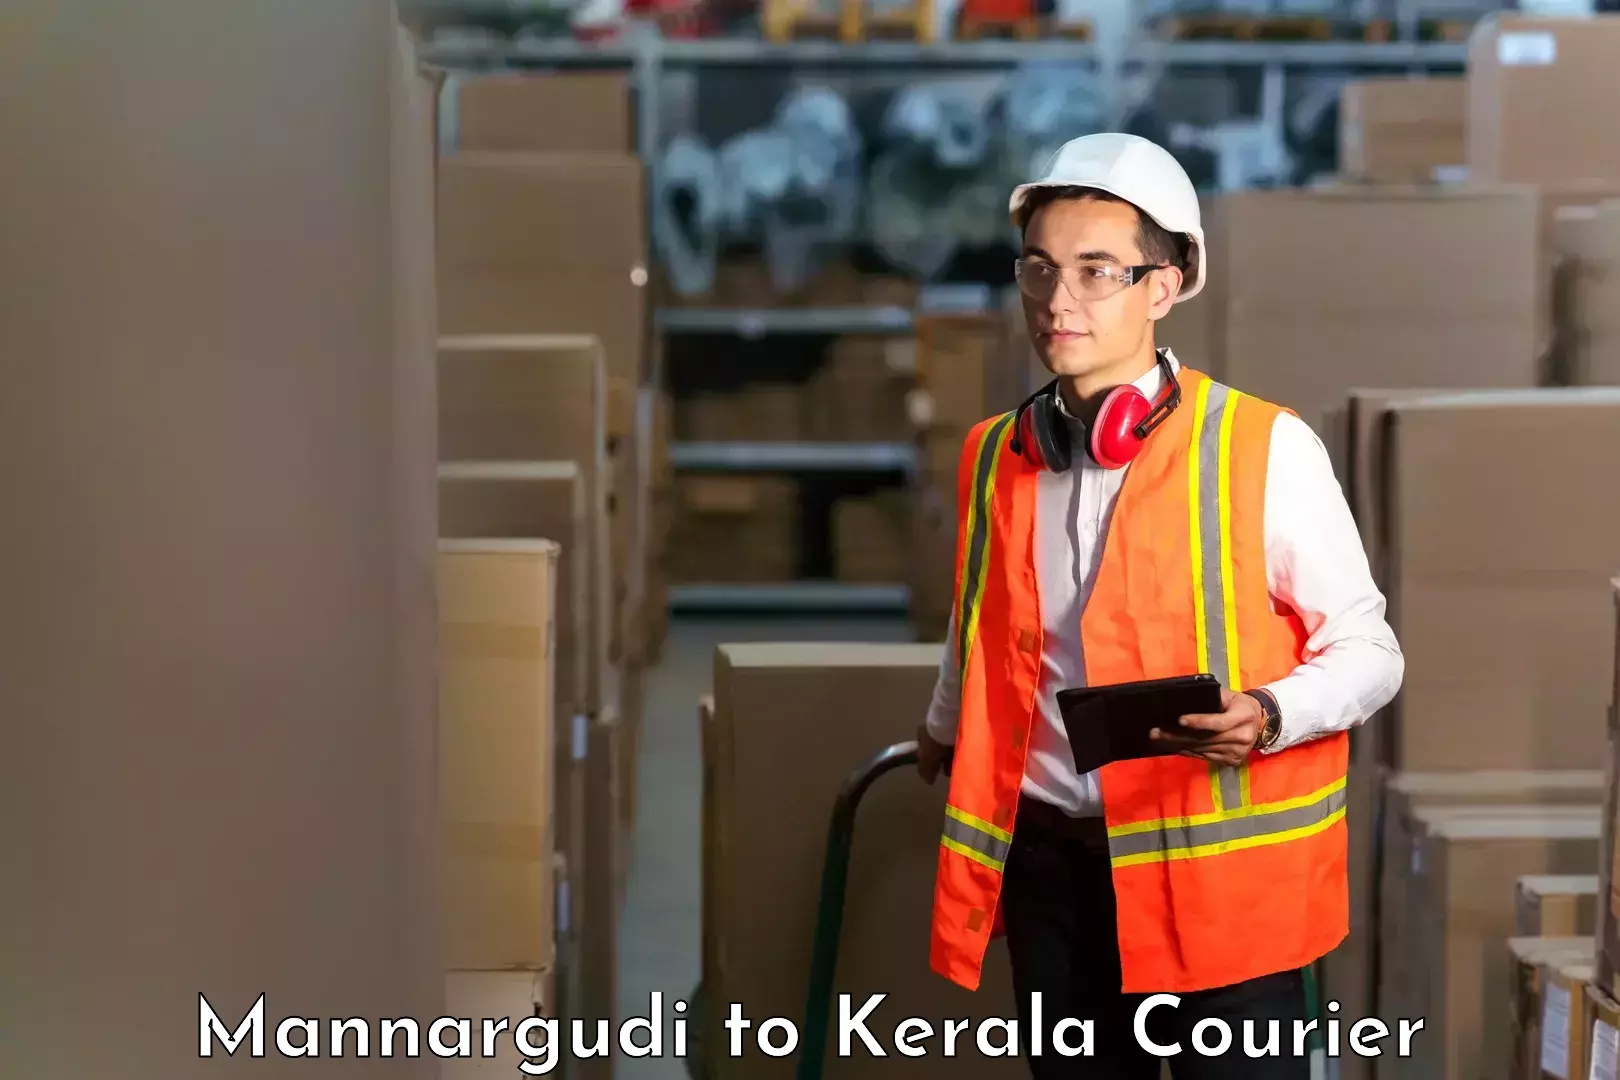 Courier service partnerships Mannargudi to Kerala